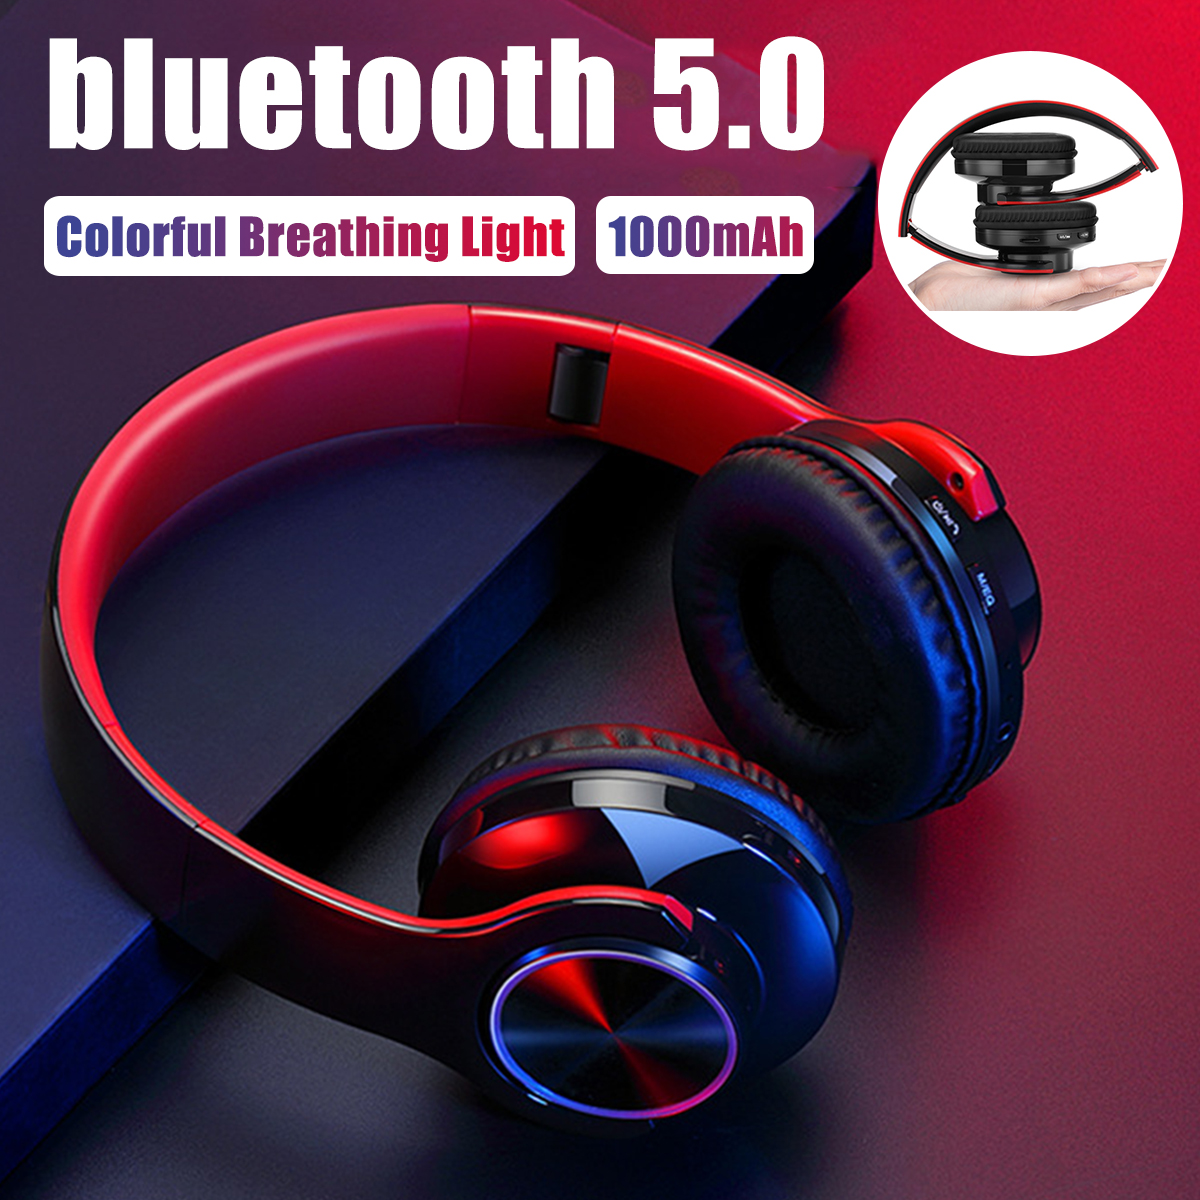 Foldable Wireless bluetooth V5.0 Headset LED Breathing Light Gaming Headphone Support FM Radio TF Card